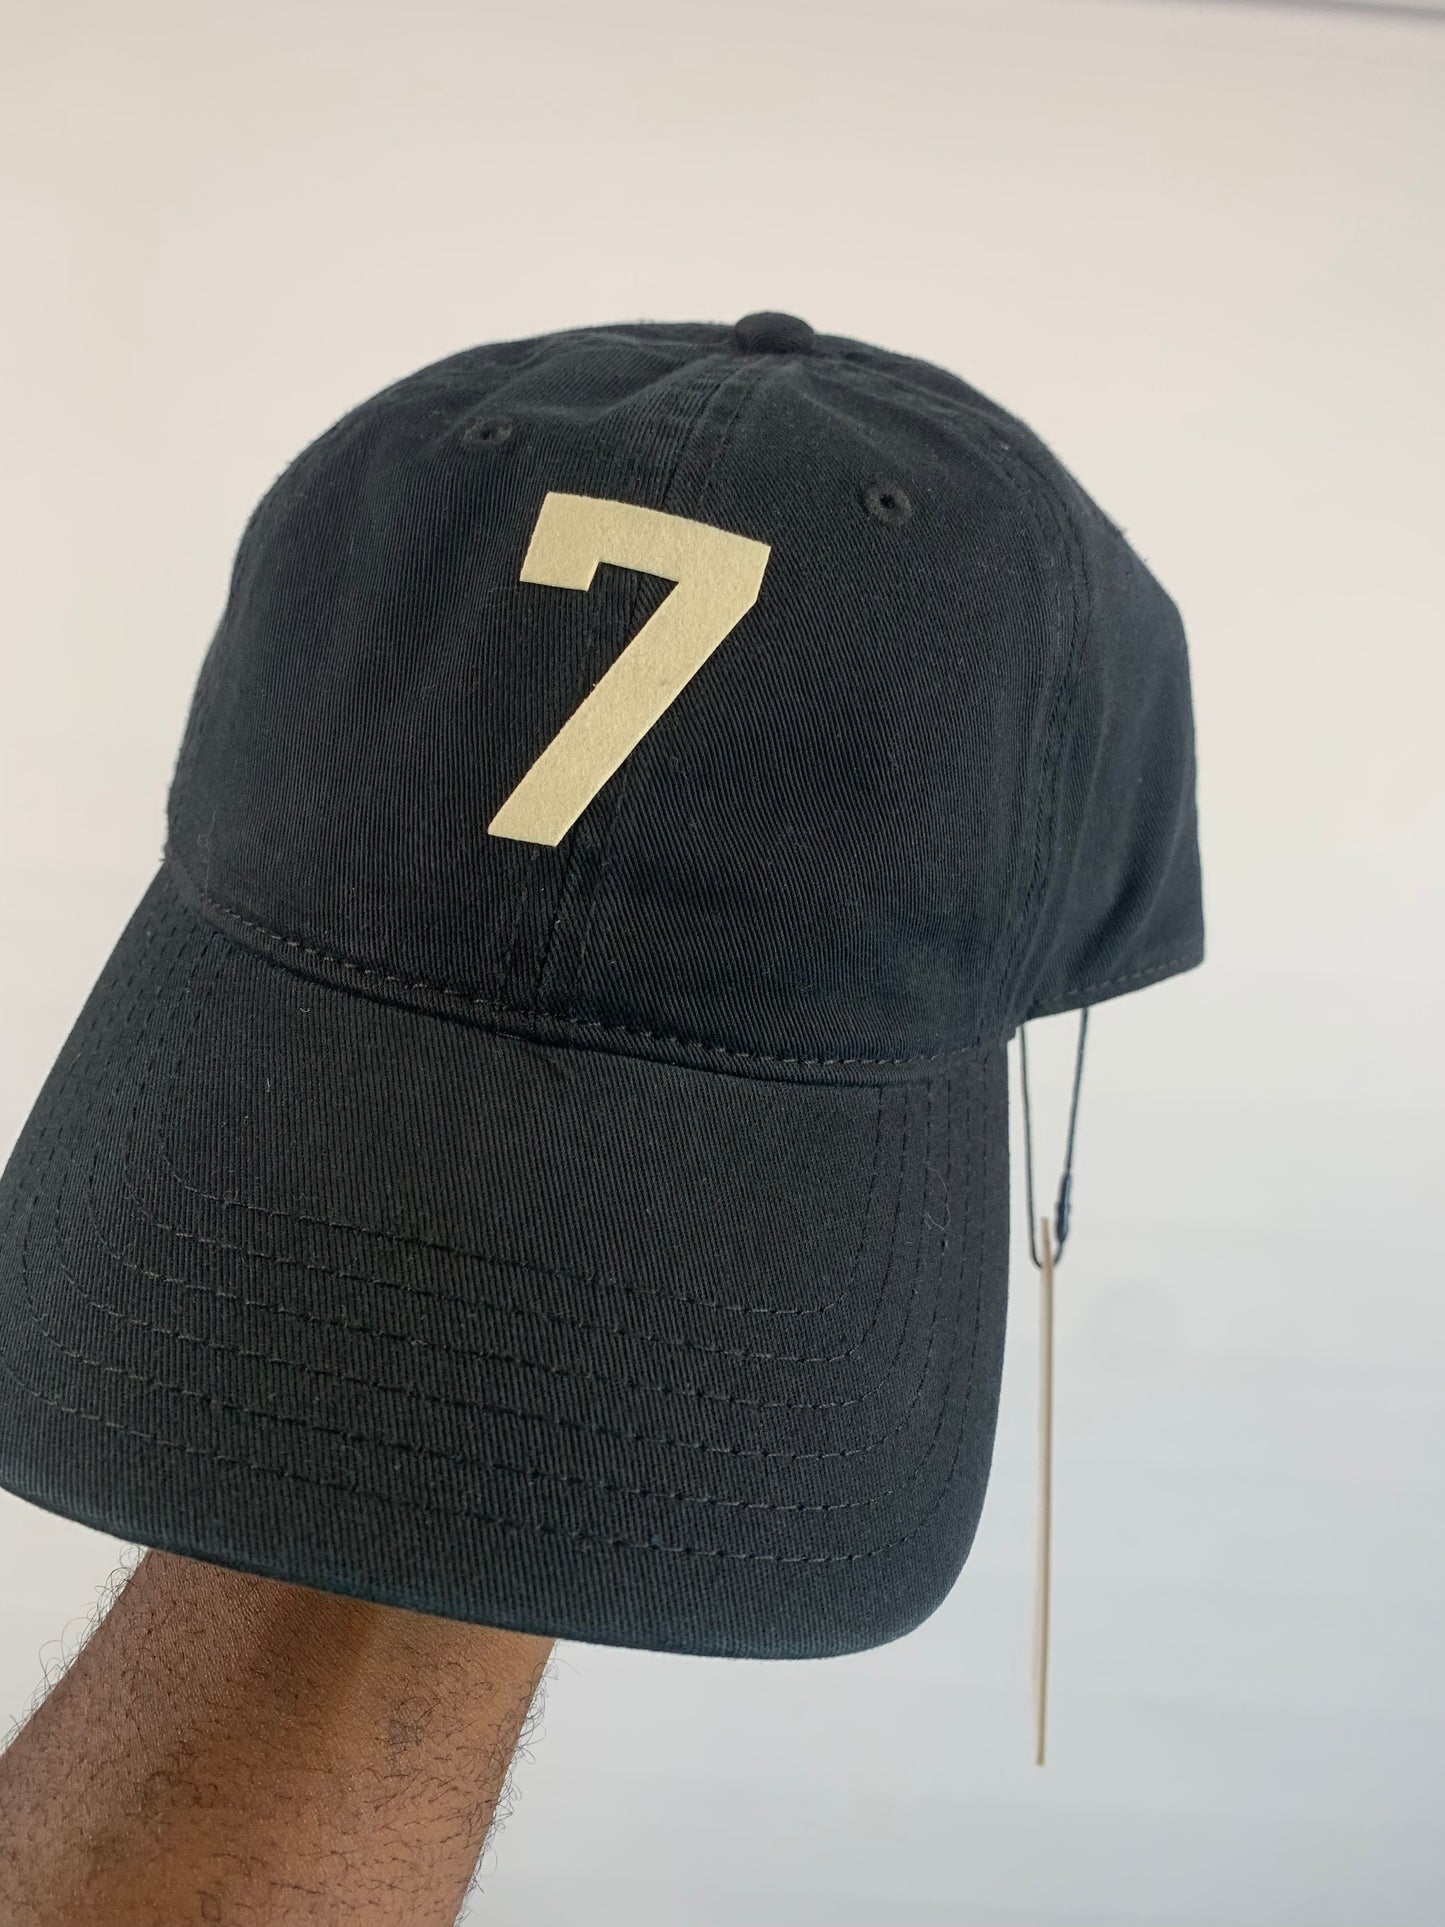 Essential Hat in black